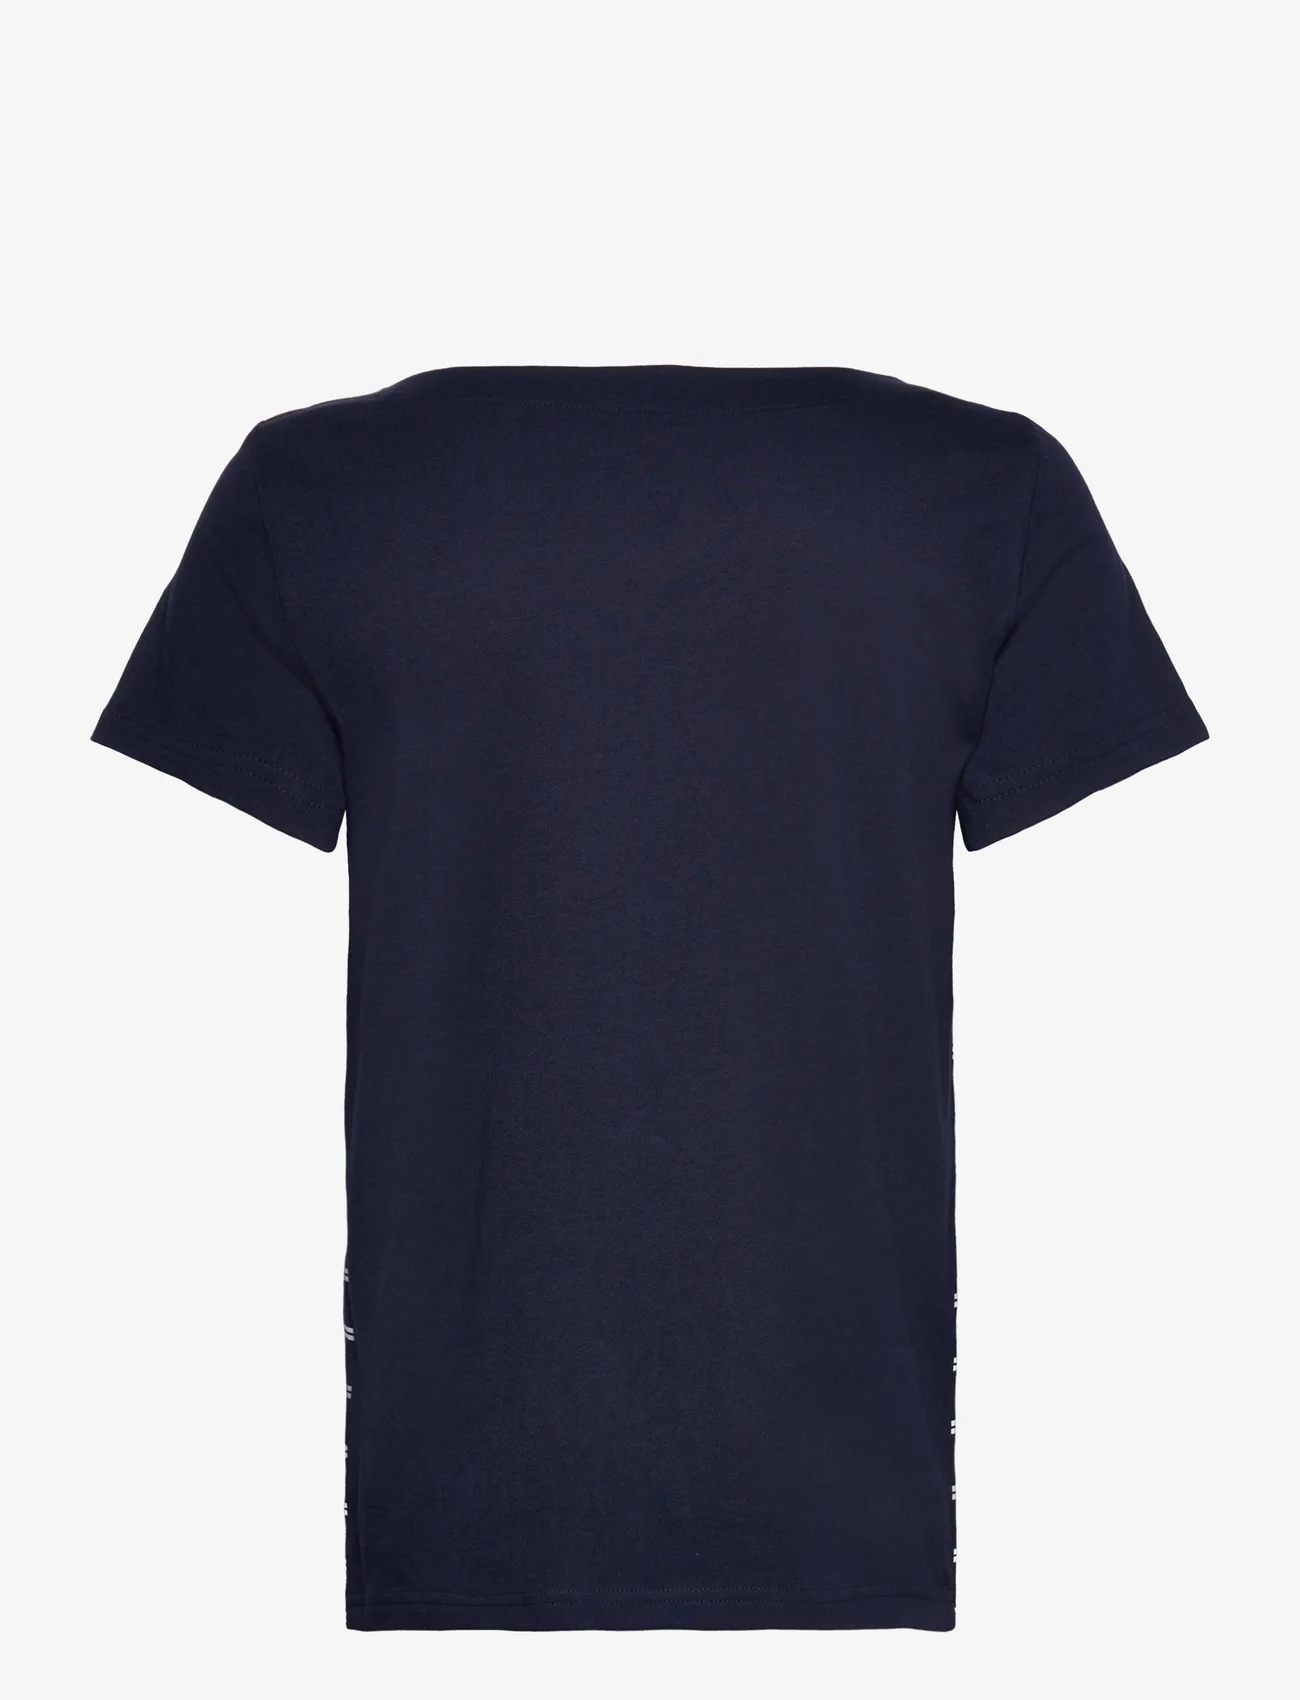 Tom Tailor - T-shirt boat neck stripe - lowest prices - sky captain blue - 1